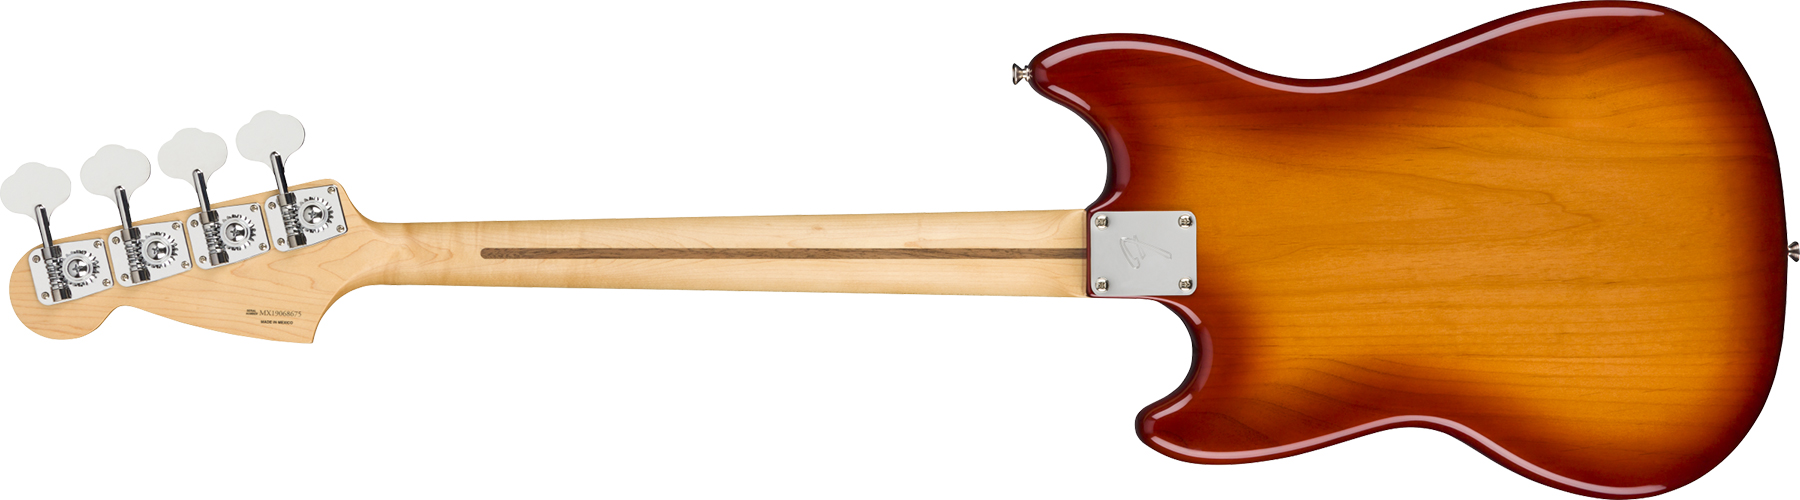 Fender Player Mustang Bass Mex Pj Mn - Sienna Sunburst - Electric bass for kids - Variation 1